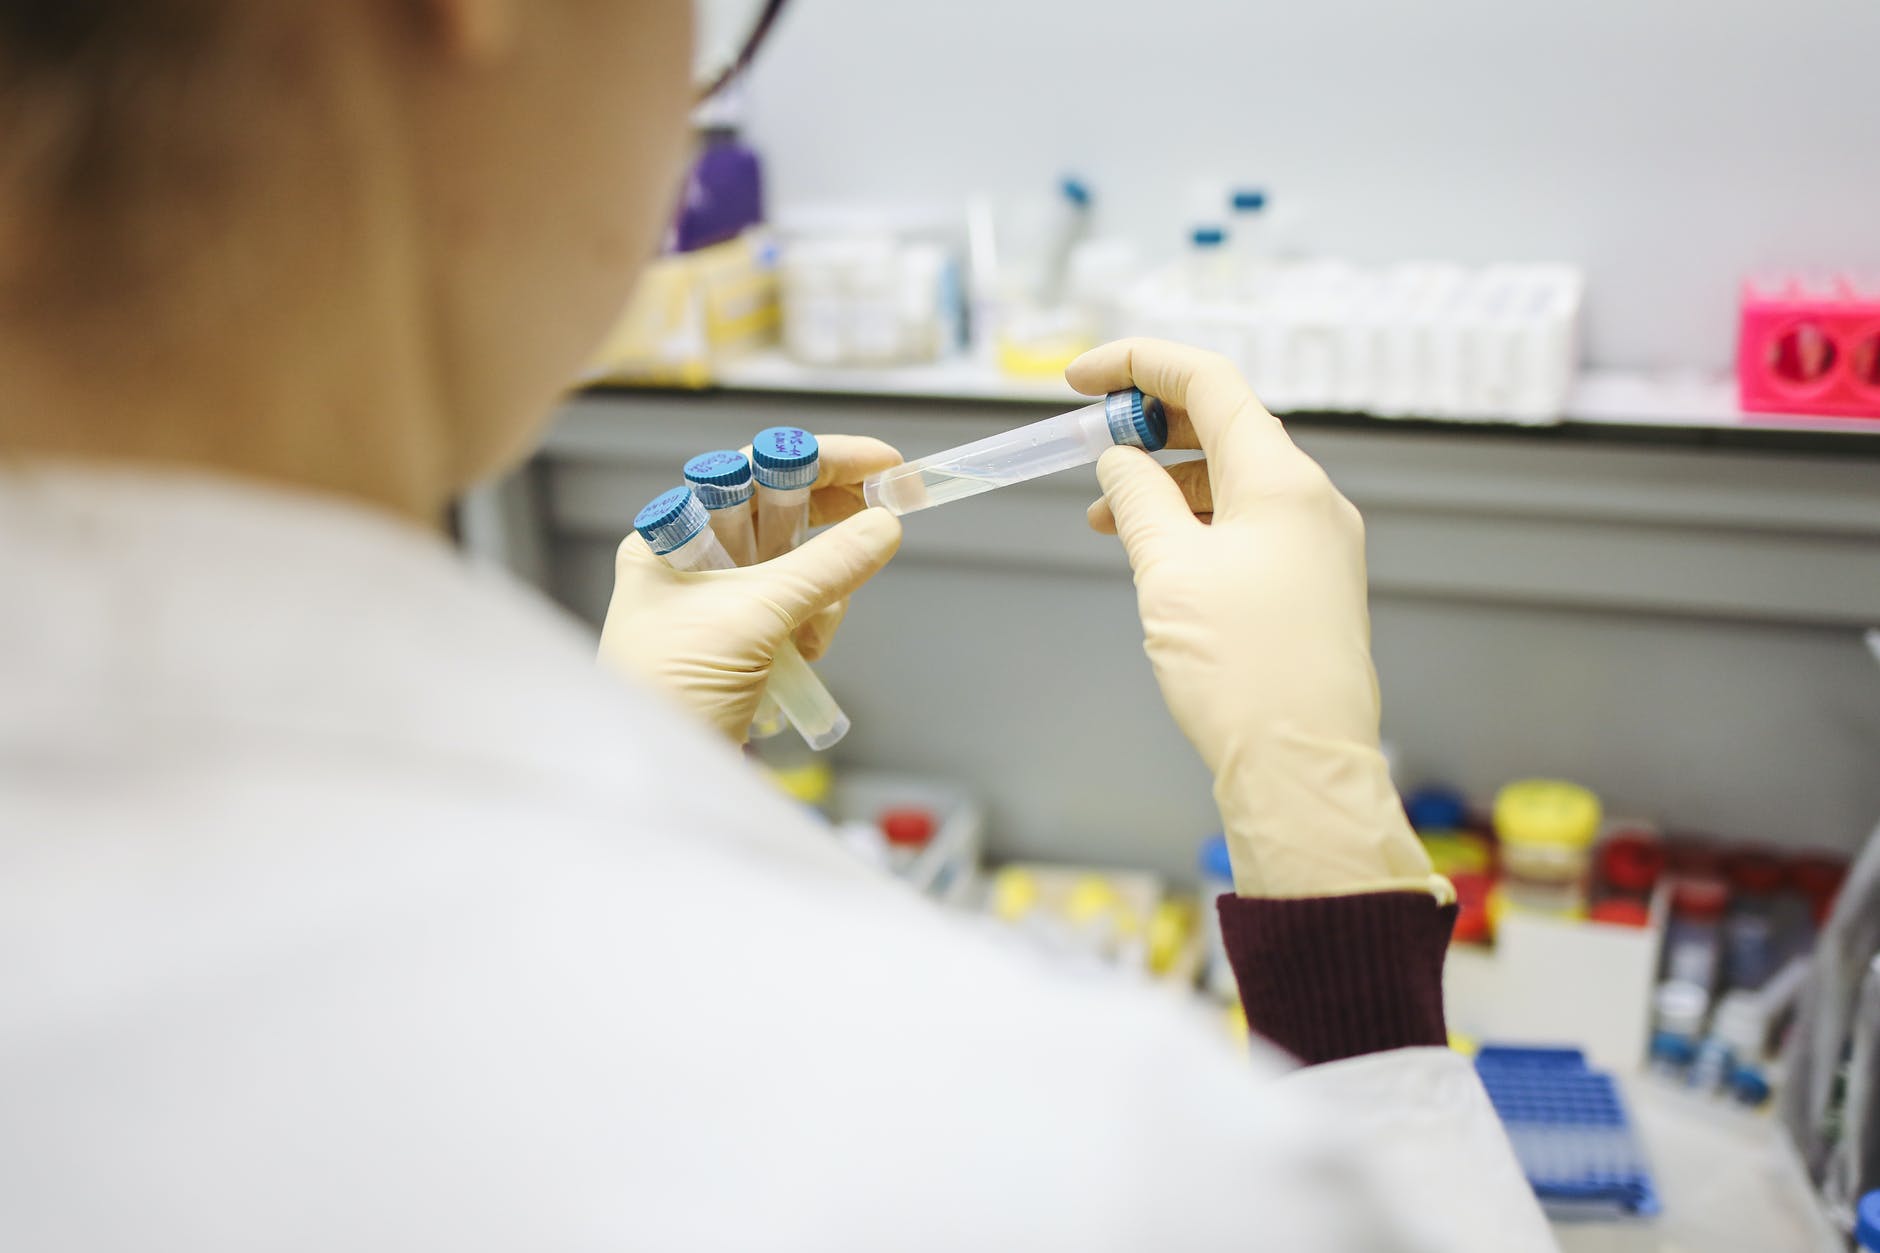 1.5 M Coronavirus Tests 'Locked Away From Public' DK Claims